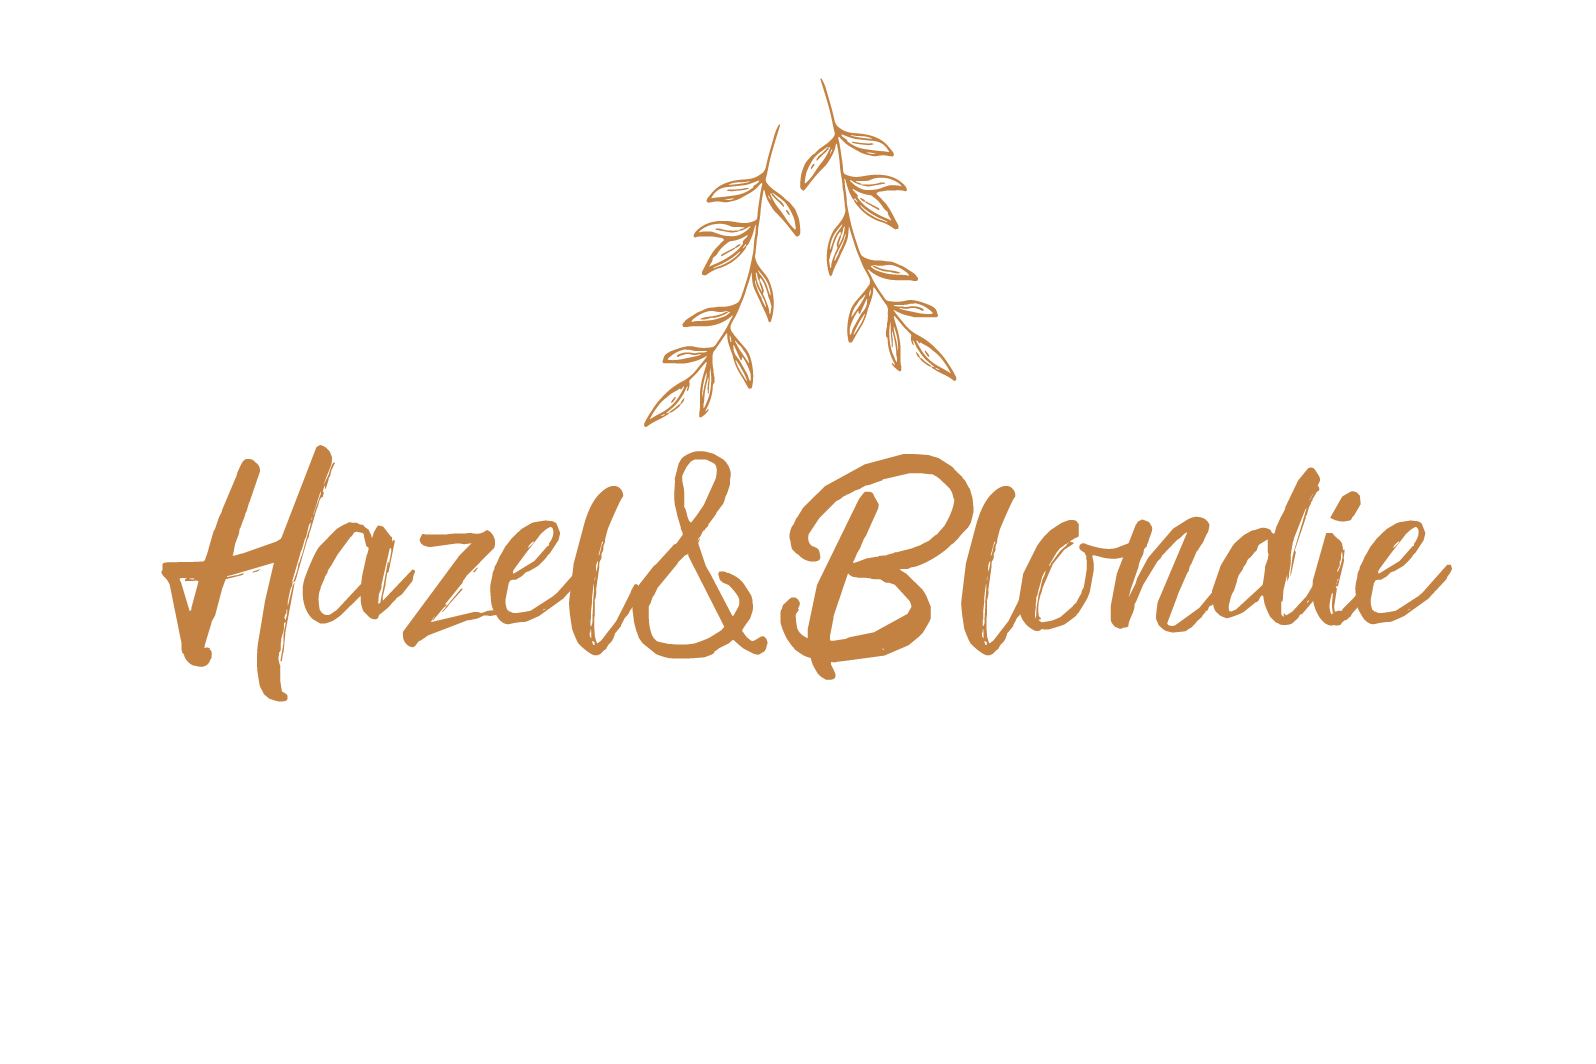 Hazel & Blondie